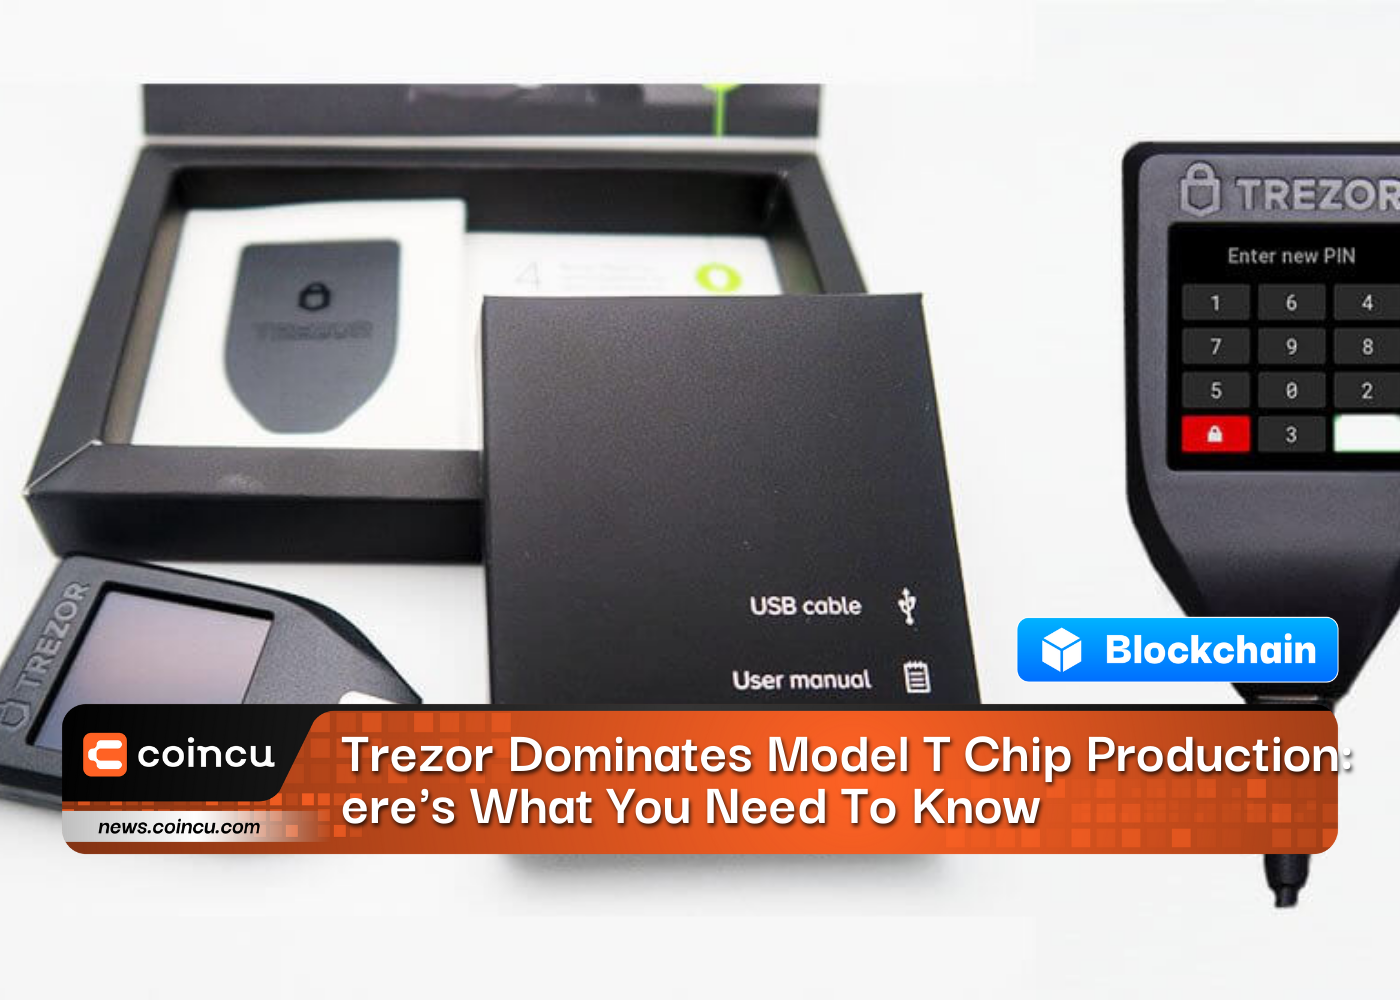 Trezor Dominates Model T Chip Production